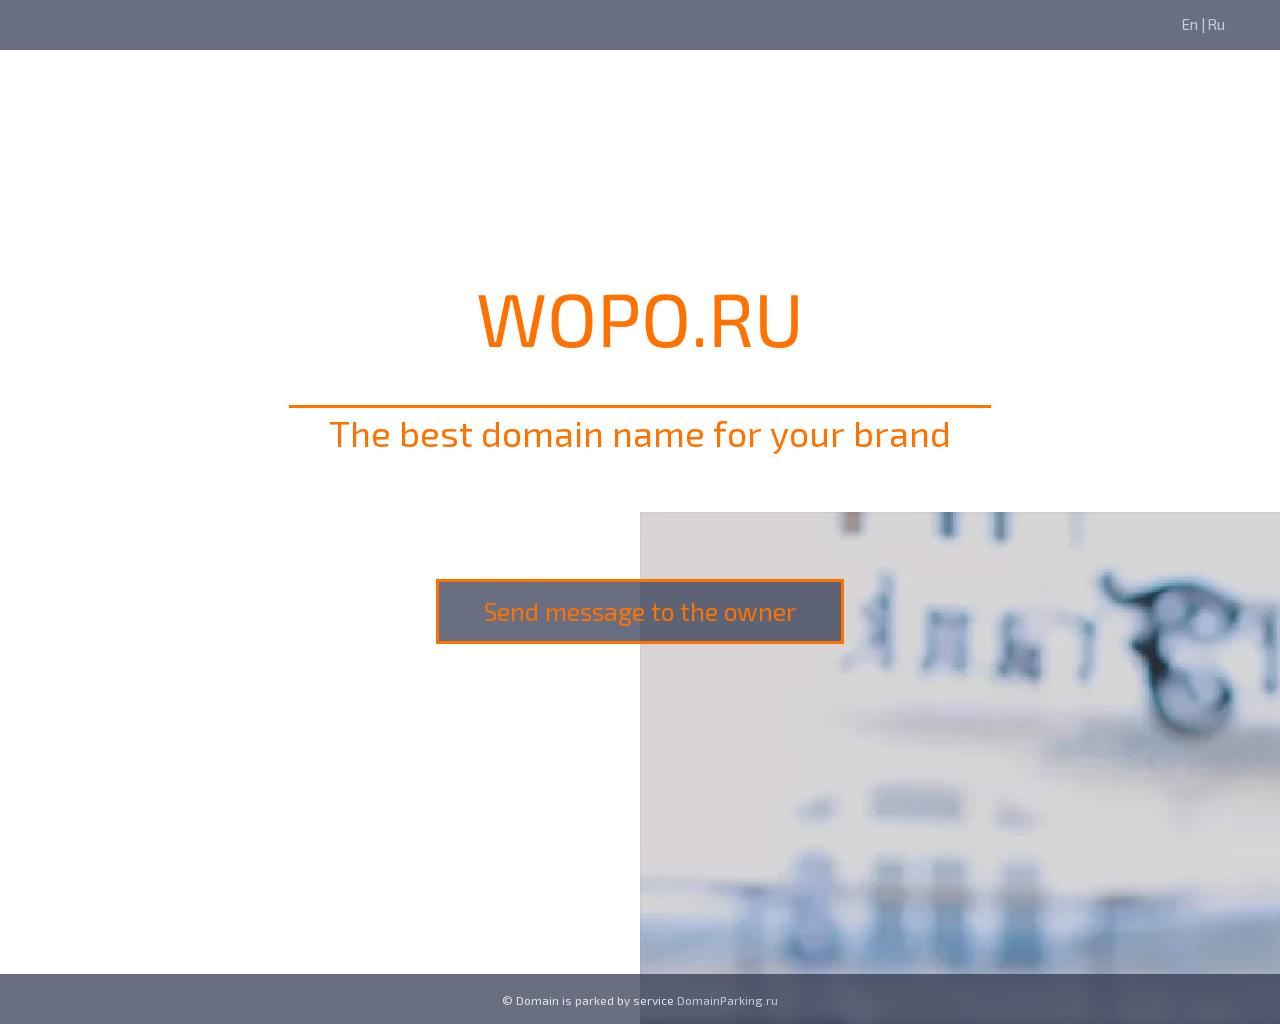 Изображение сайта wopo.ru в разрешении 1280x1024